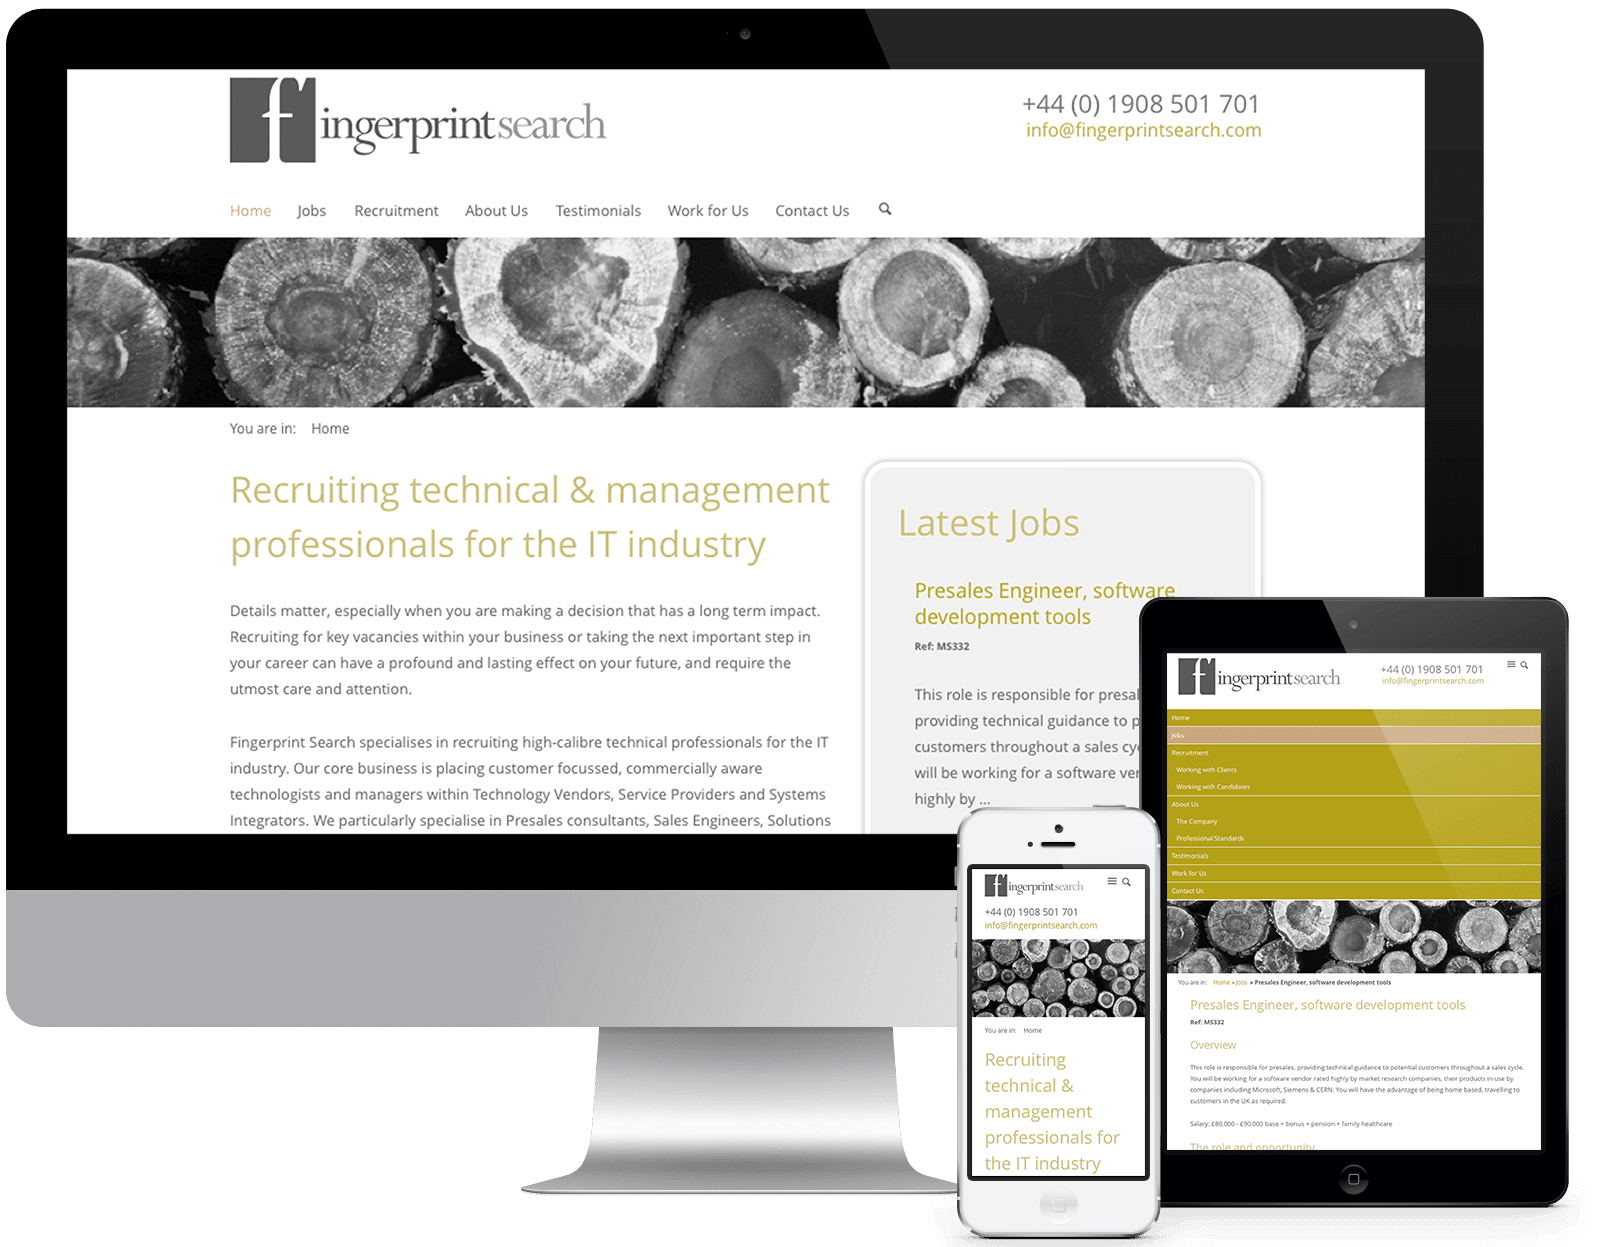 Fingerprint Search - Visit the Website